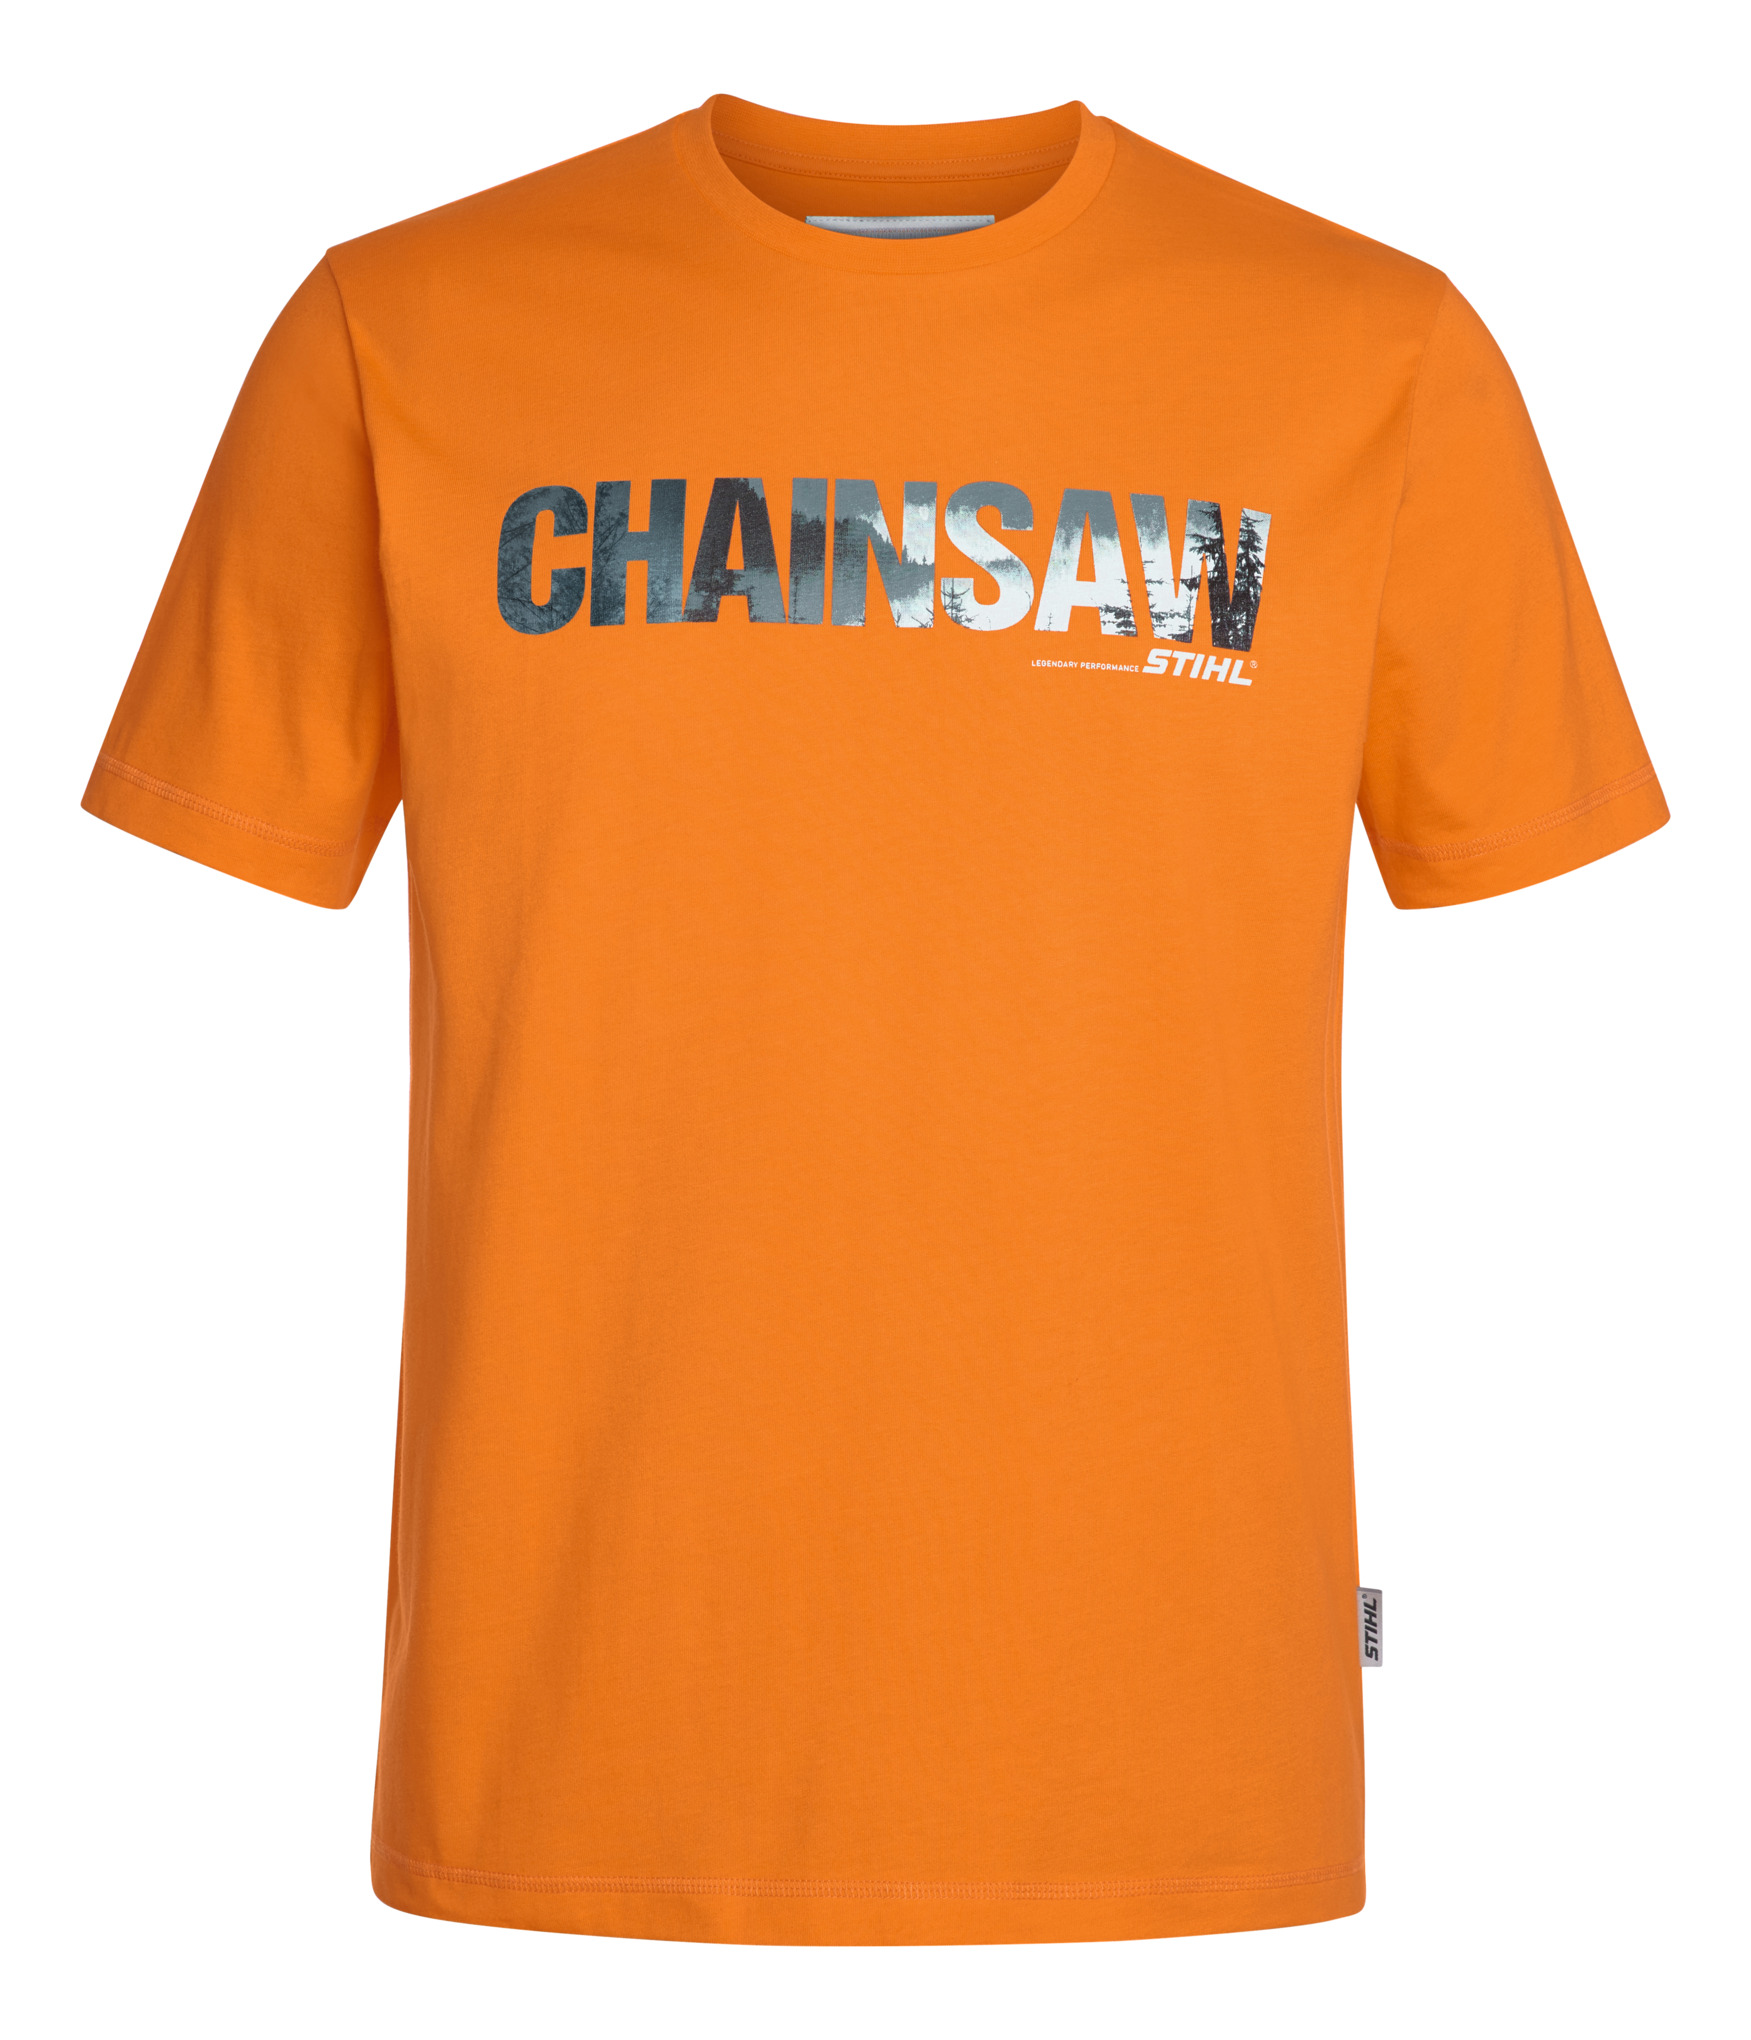 Chainsaw t-shirt, orange